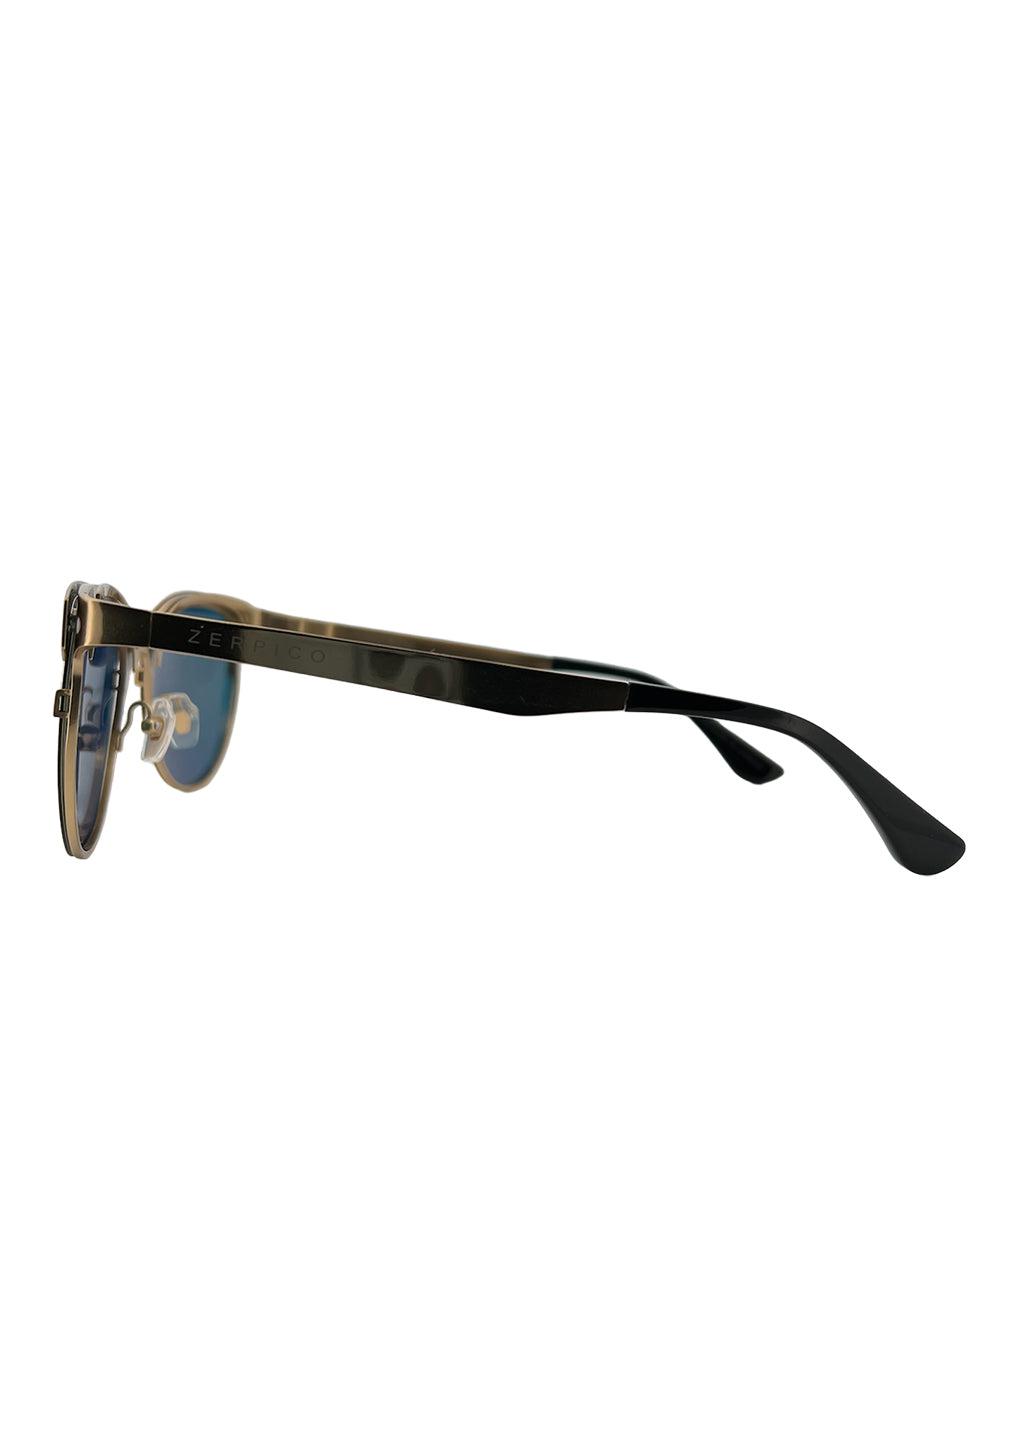 Titanium Clubmasters Sunglasses - V2 - 24K GOLD Plated-7